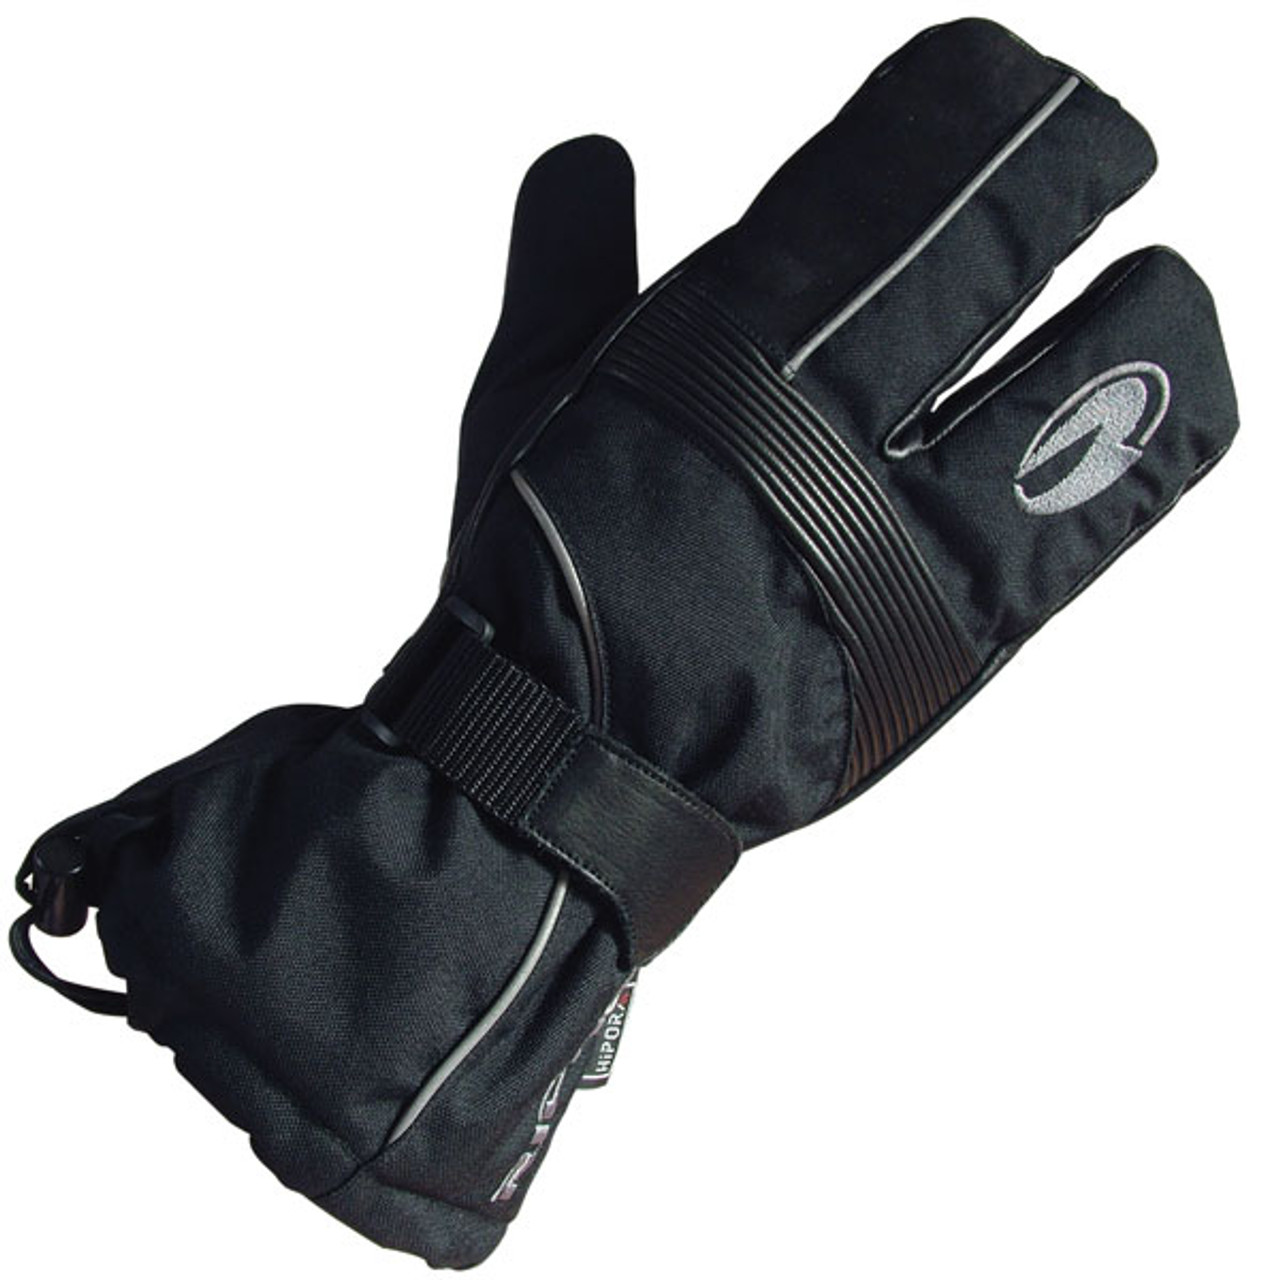 Richa 2330 Waterproof Mitten Styled Gloves - Black